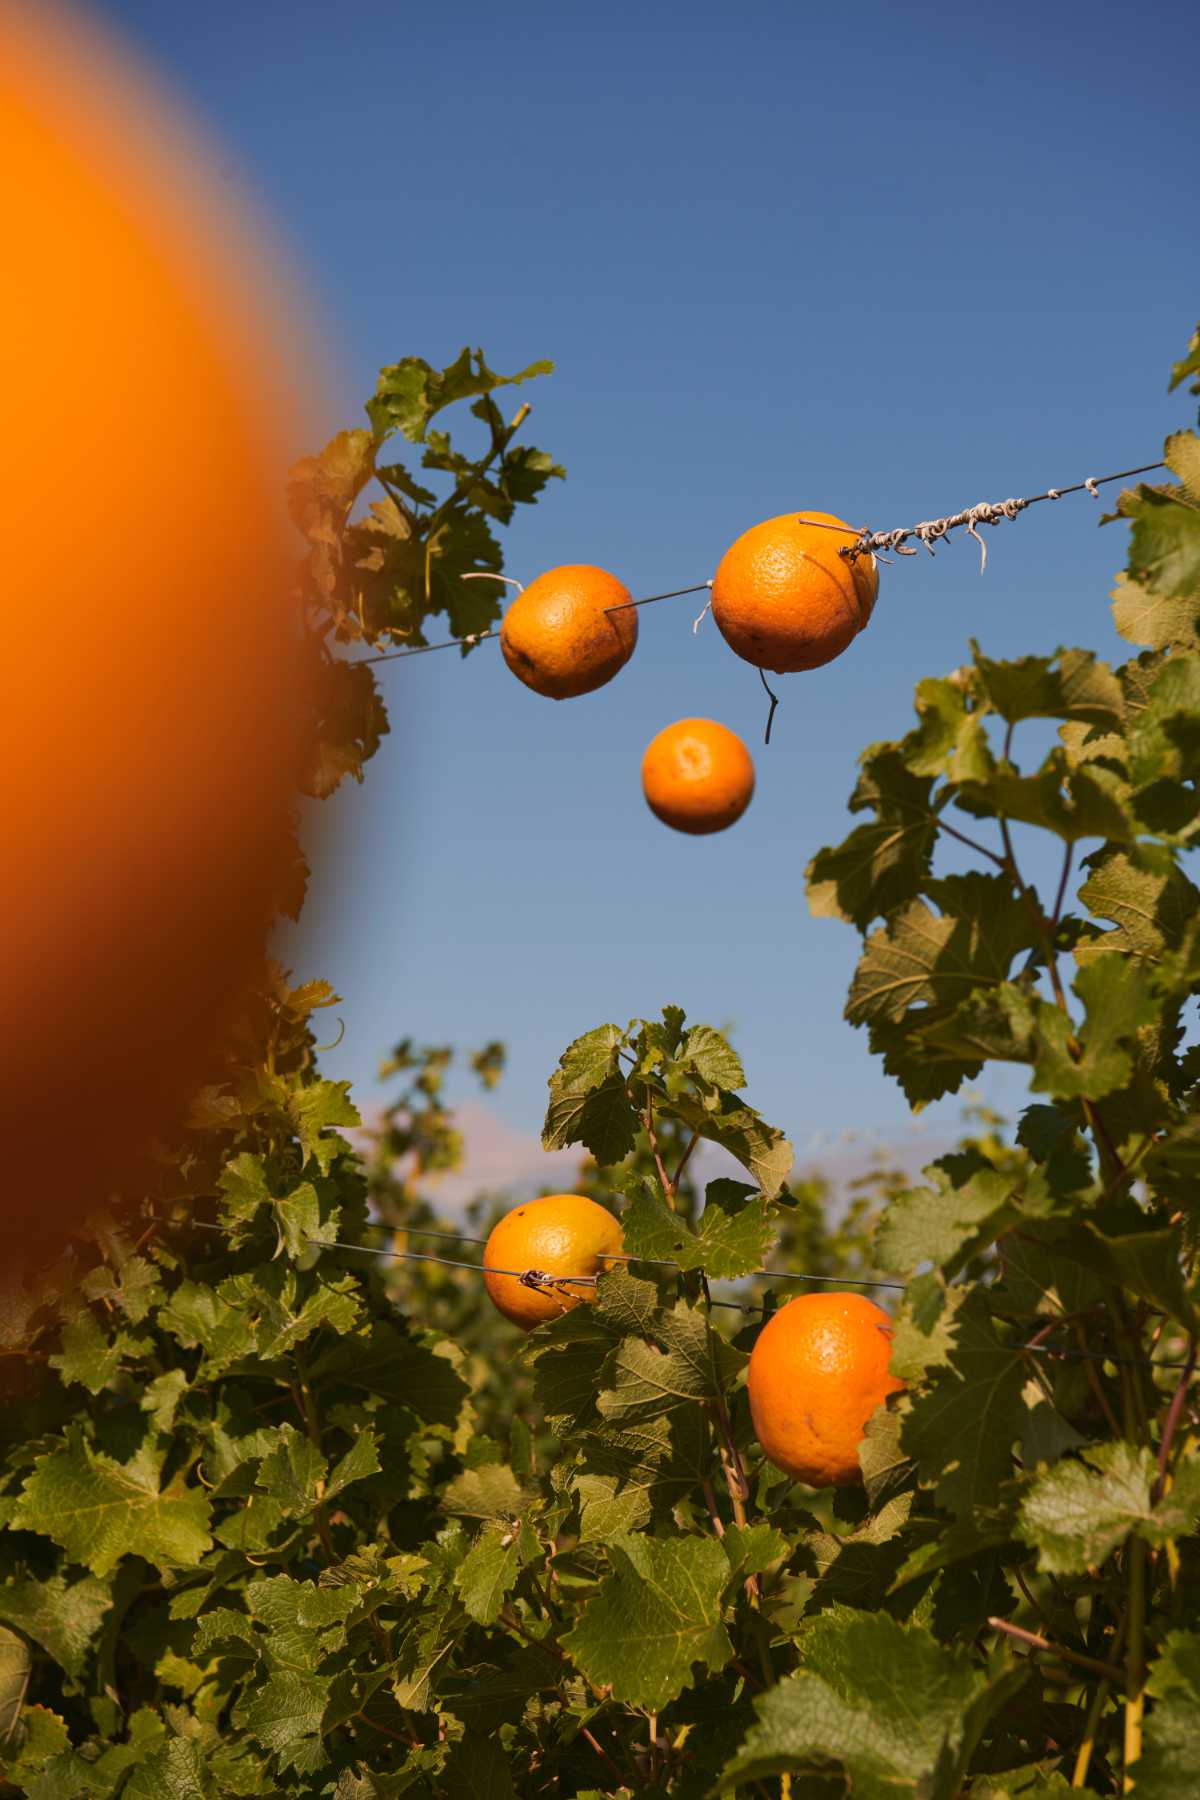 The First Sip Of Summer - CHANDON Garden Spritz: A Delicious, Uplifting Spritz Experience